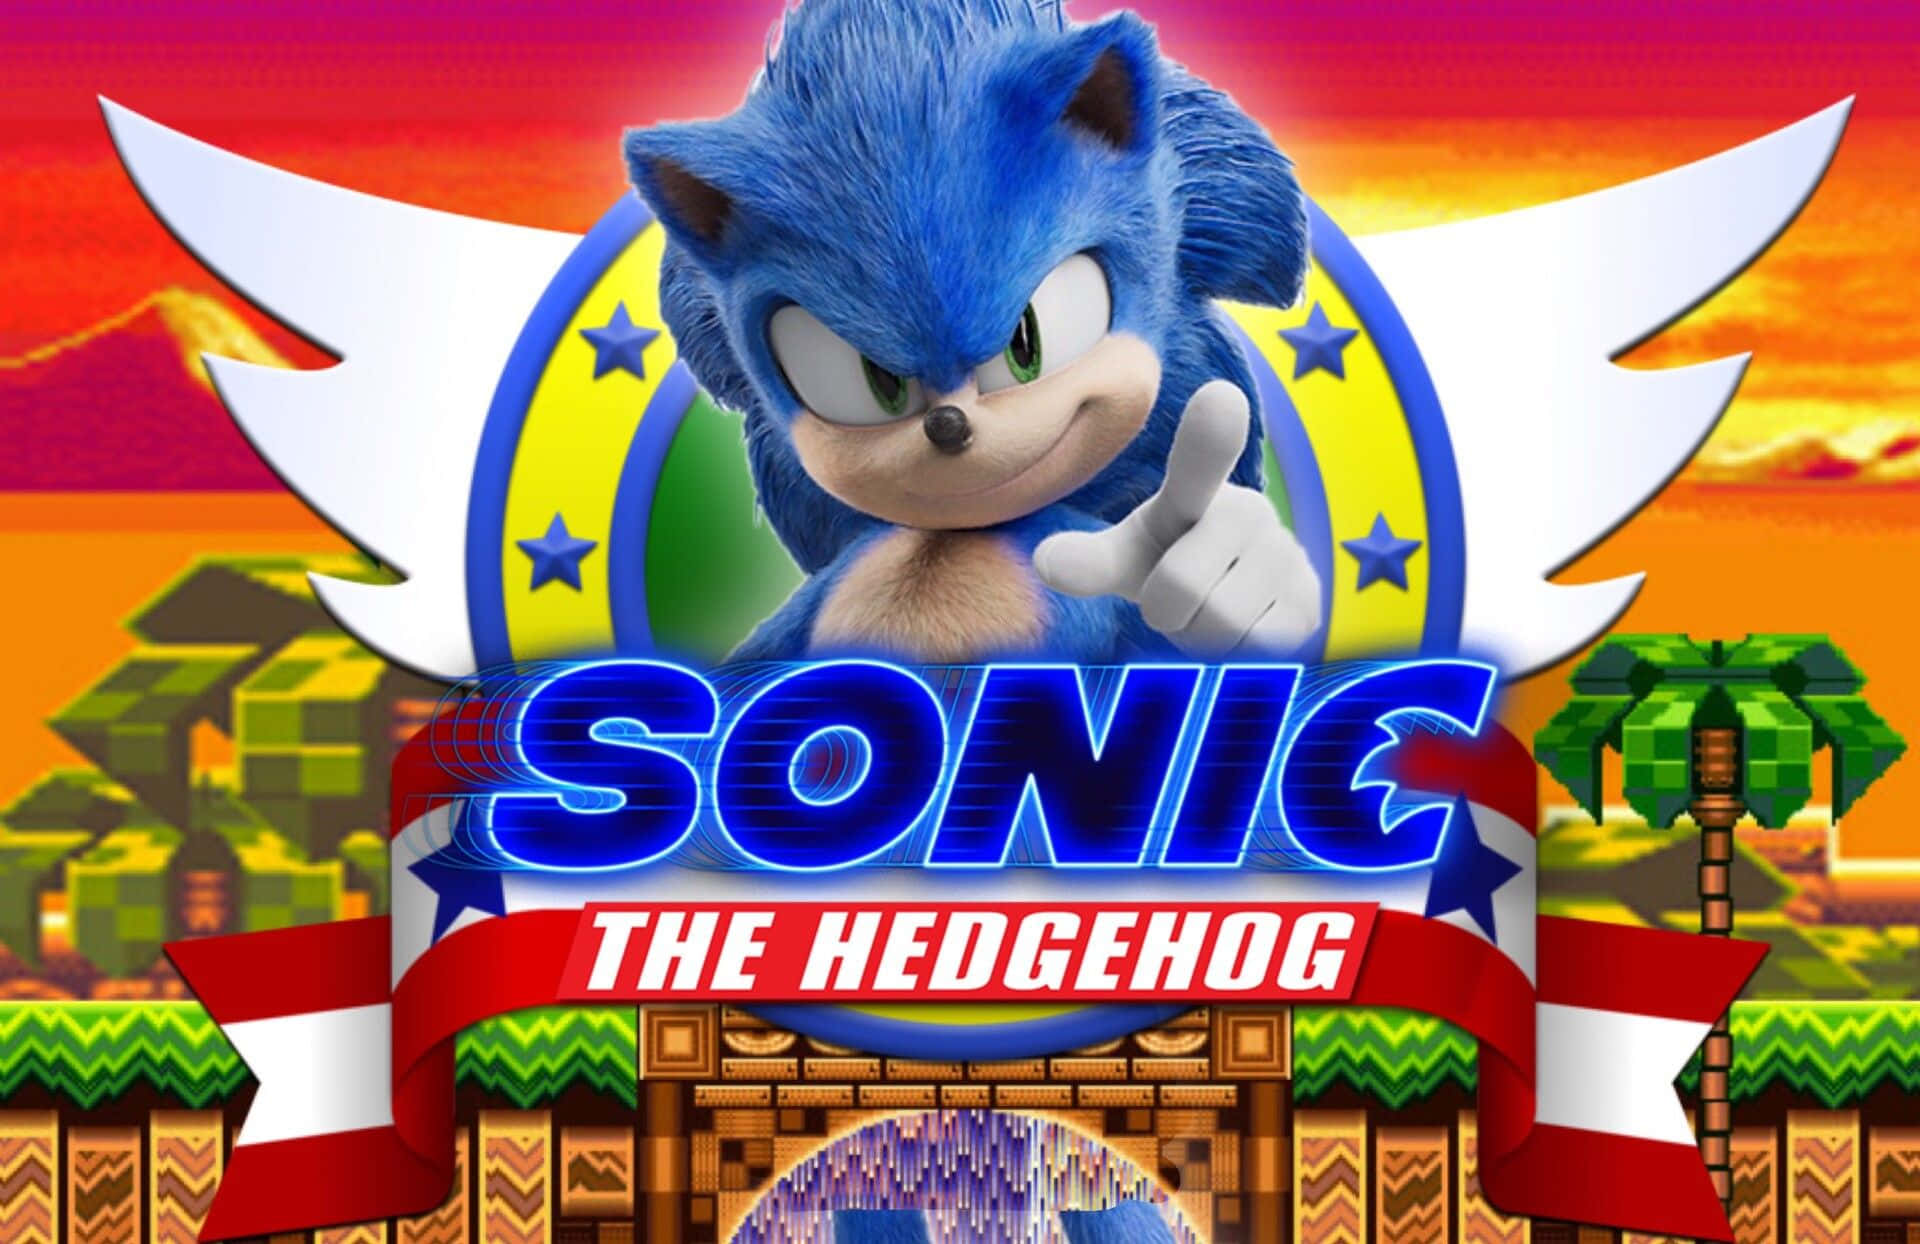 Sonic the Hedgehog speeding through a bright, green landscape